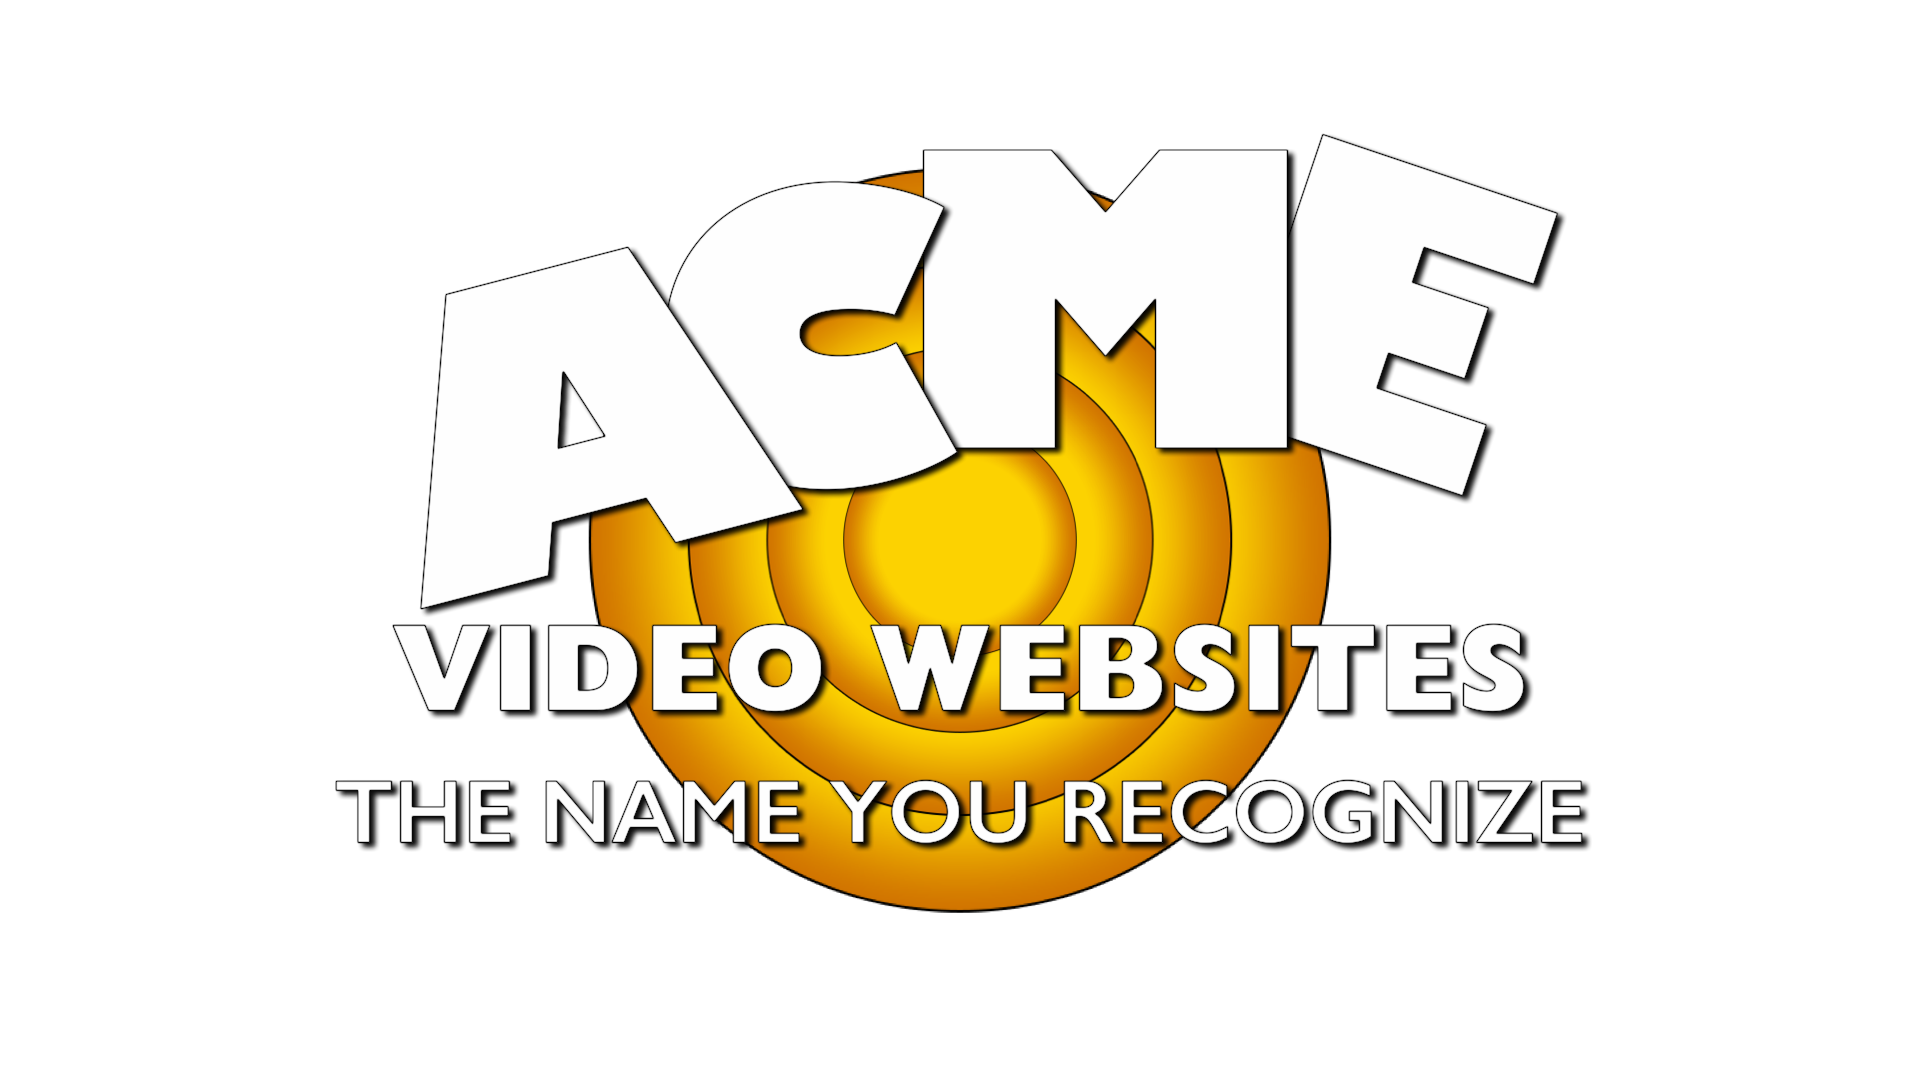 ACME Video Websites